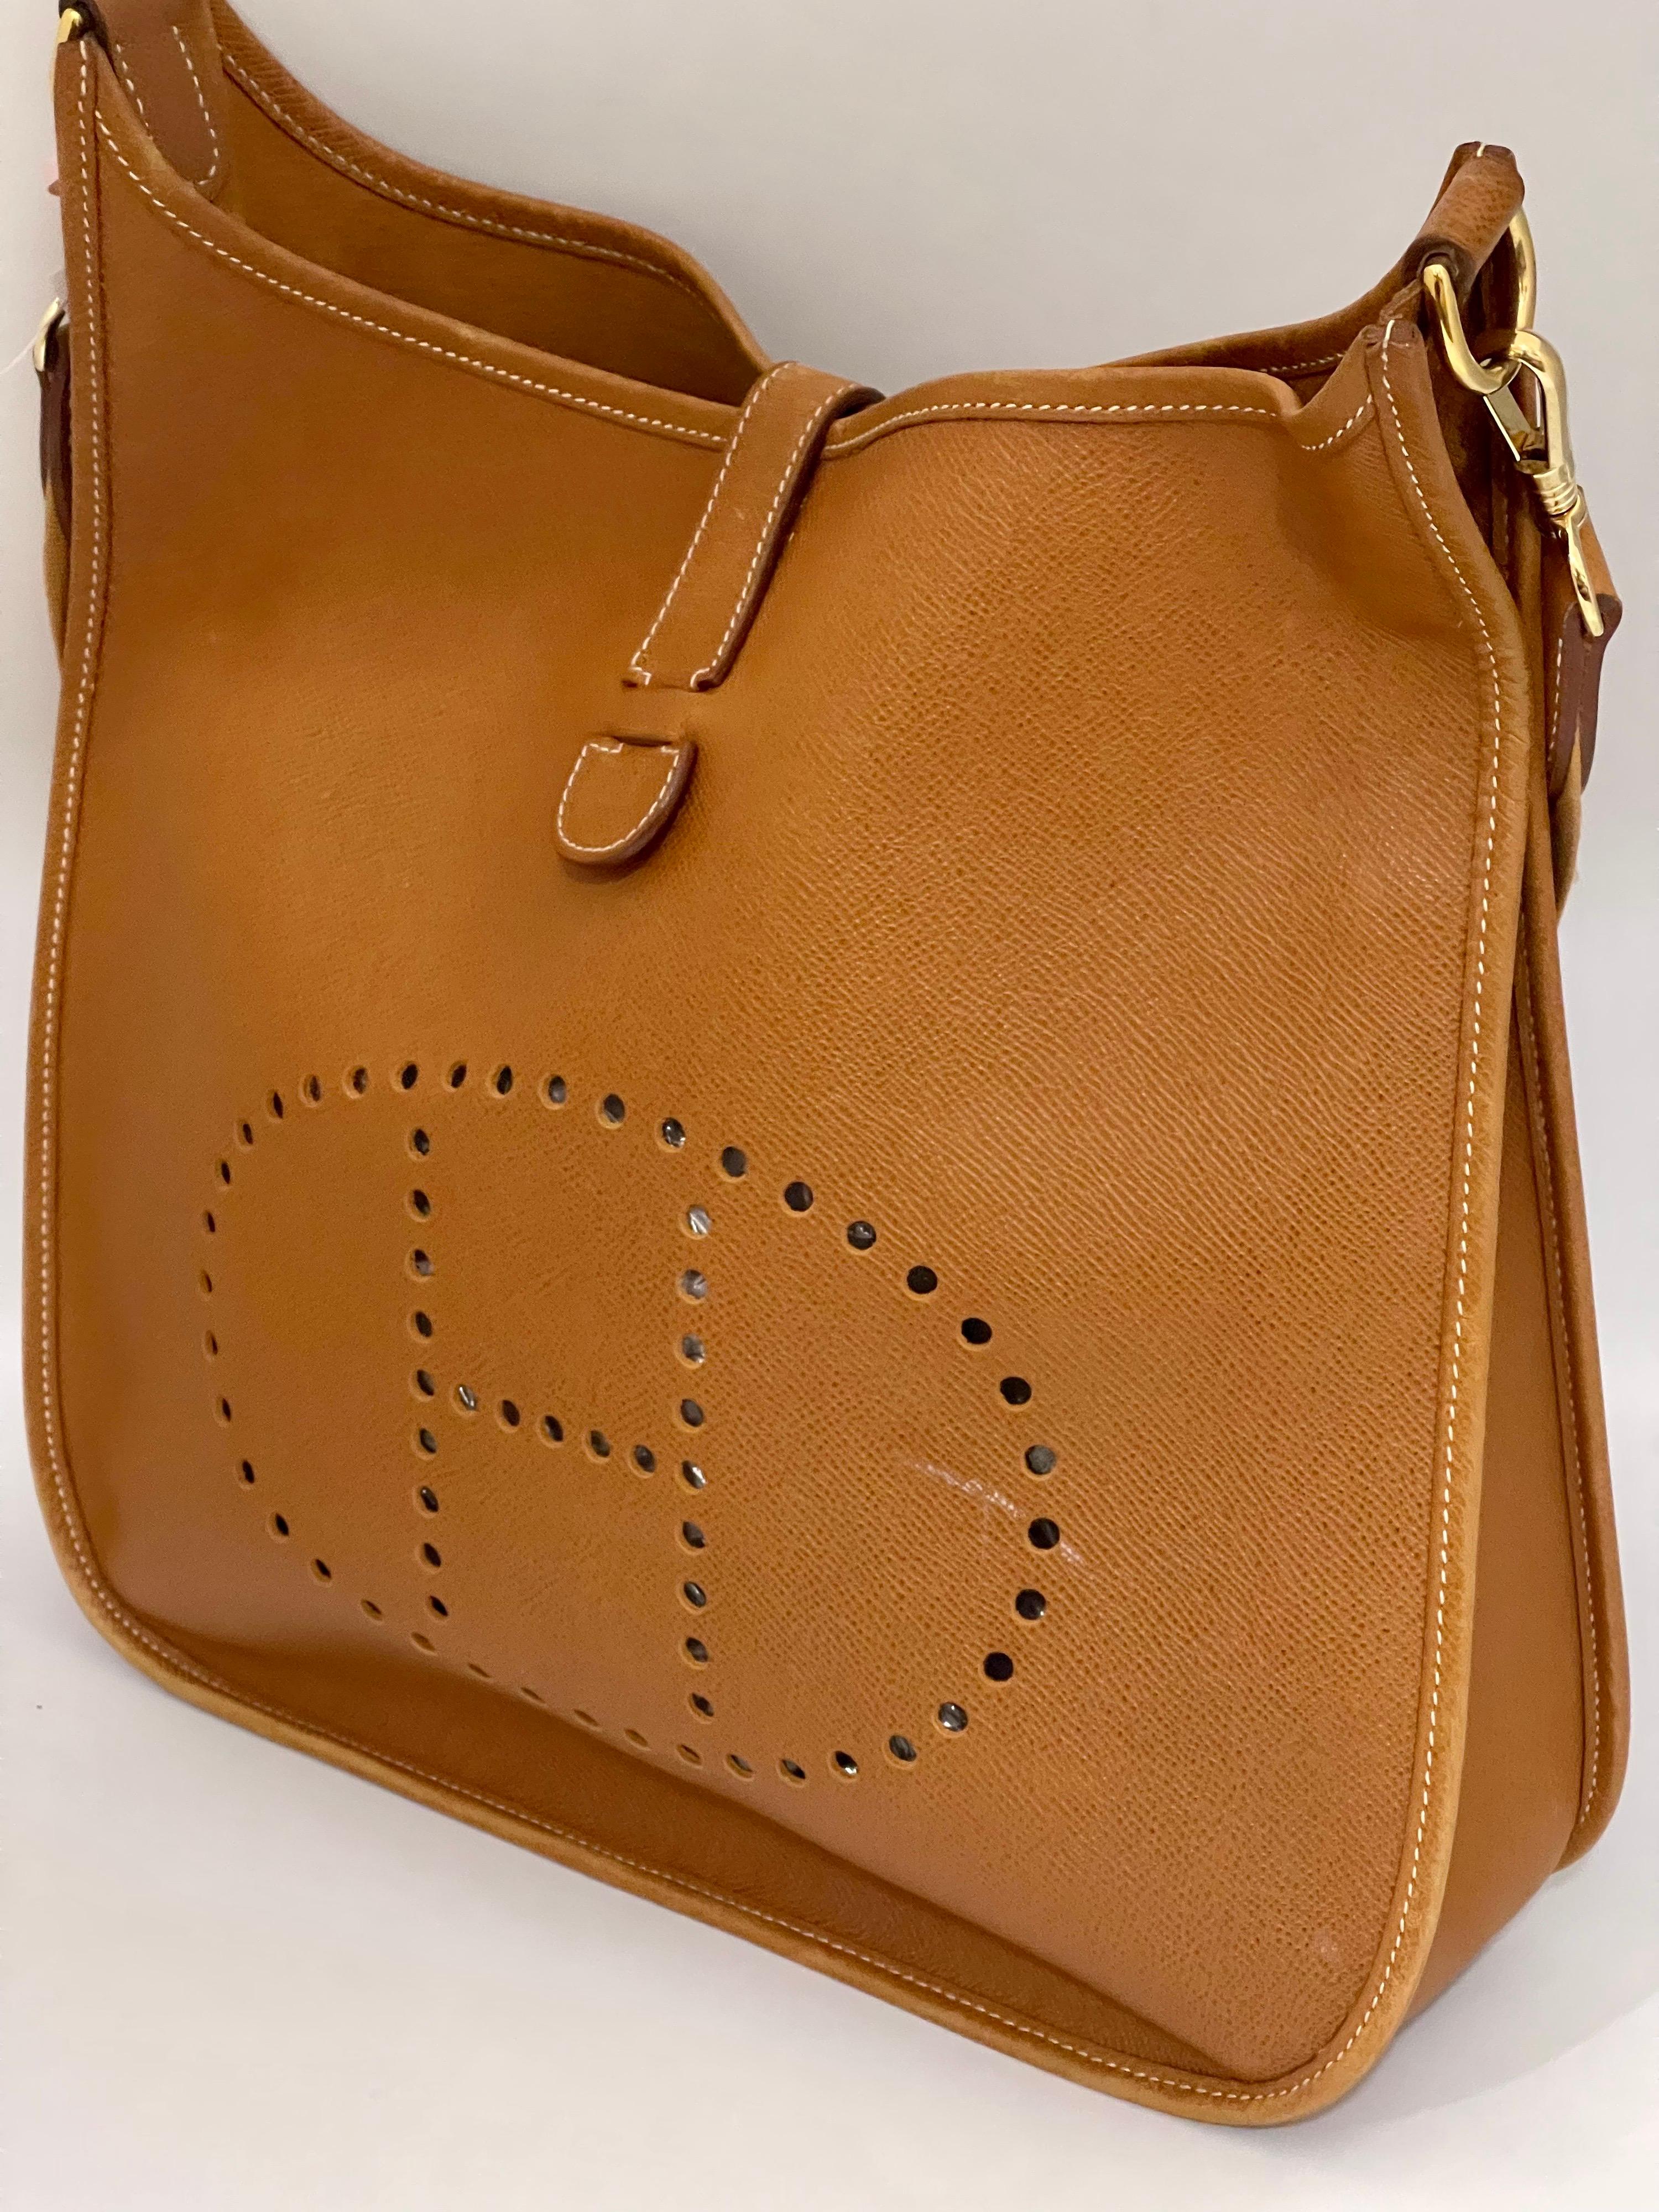 Hermès Evelyne Pm Brown Leather Cross Body Bag 6